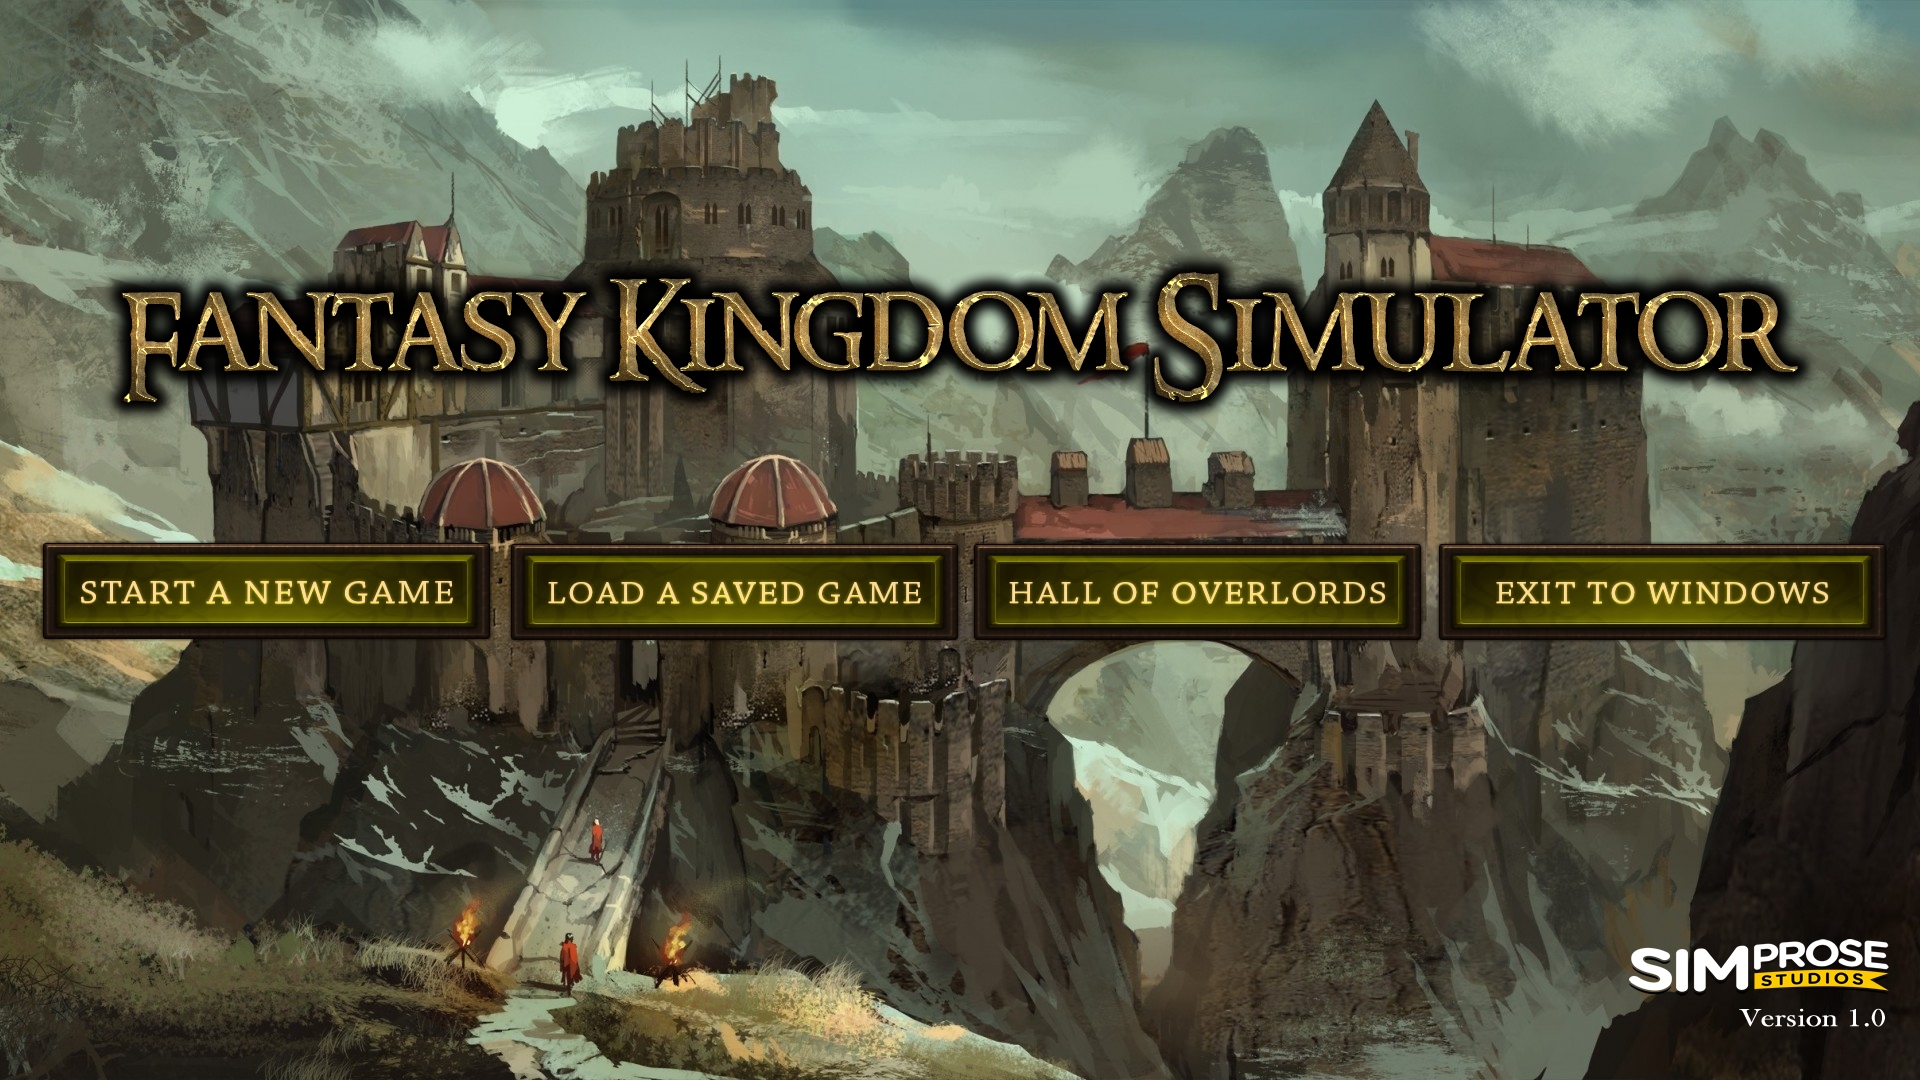 Fantasy Kingdom Simulator English Language only Steam CD Key 0.33 $